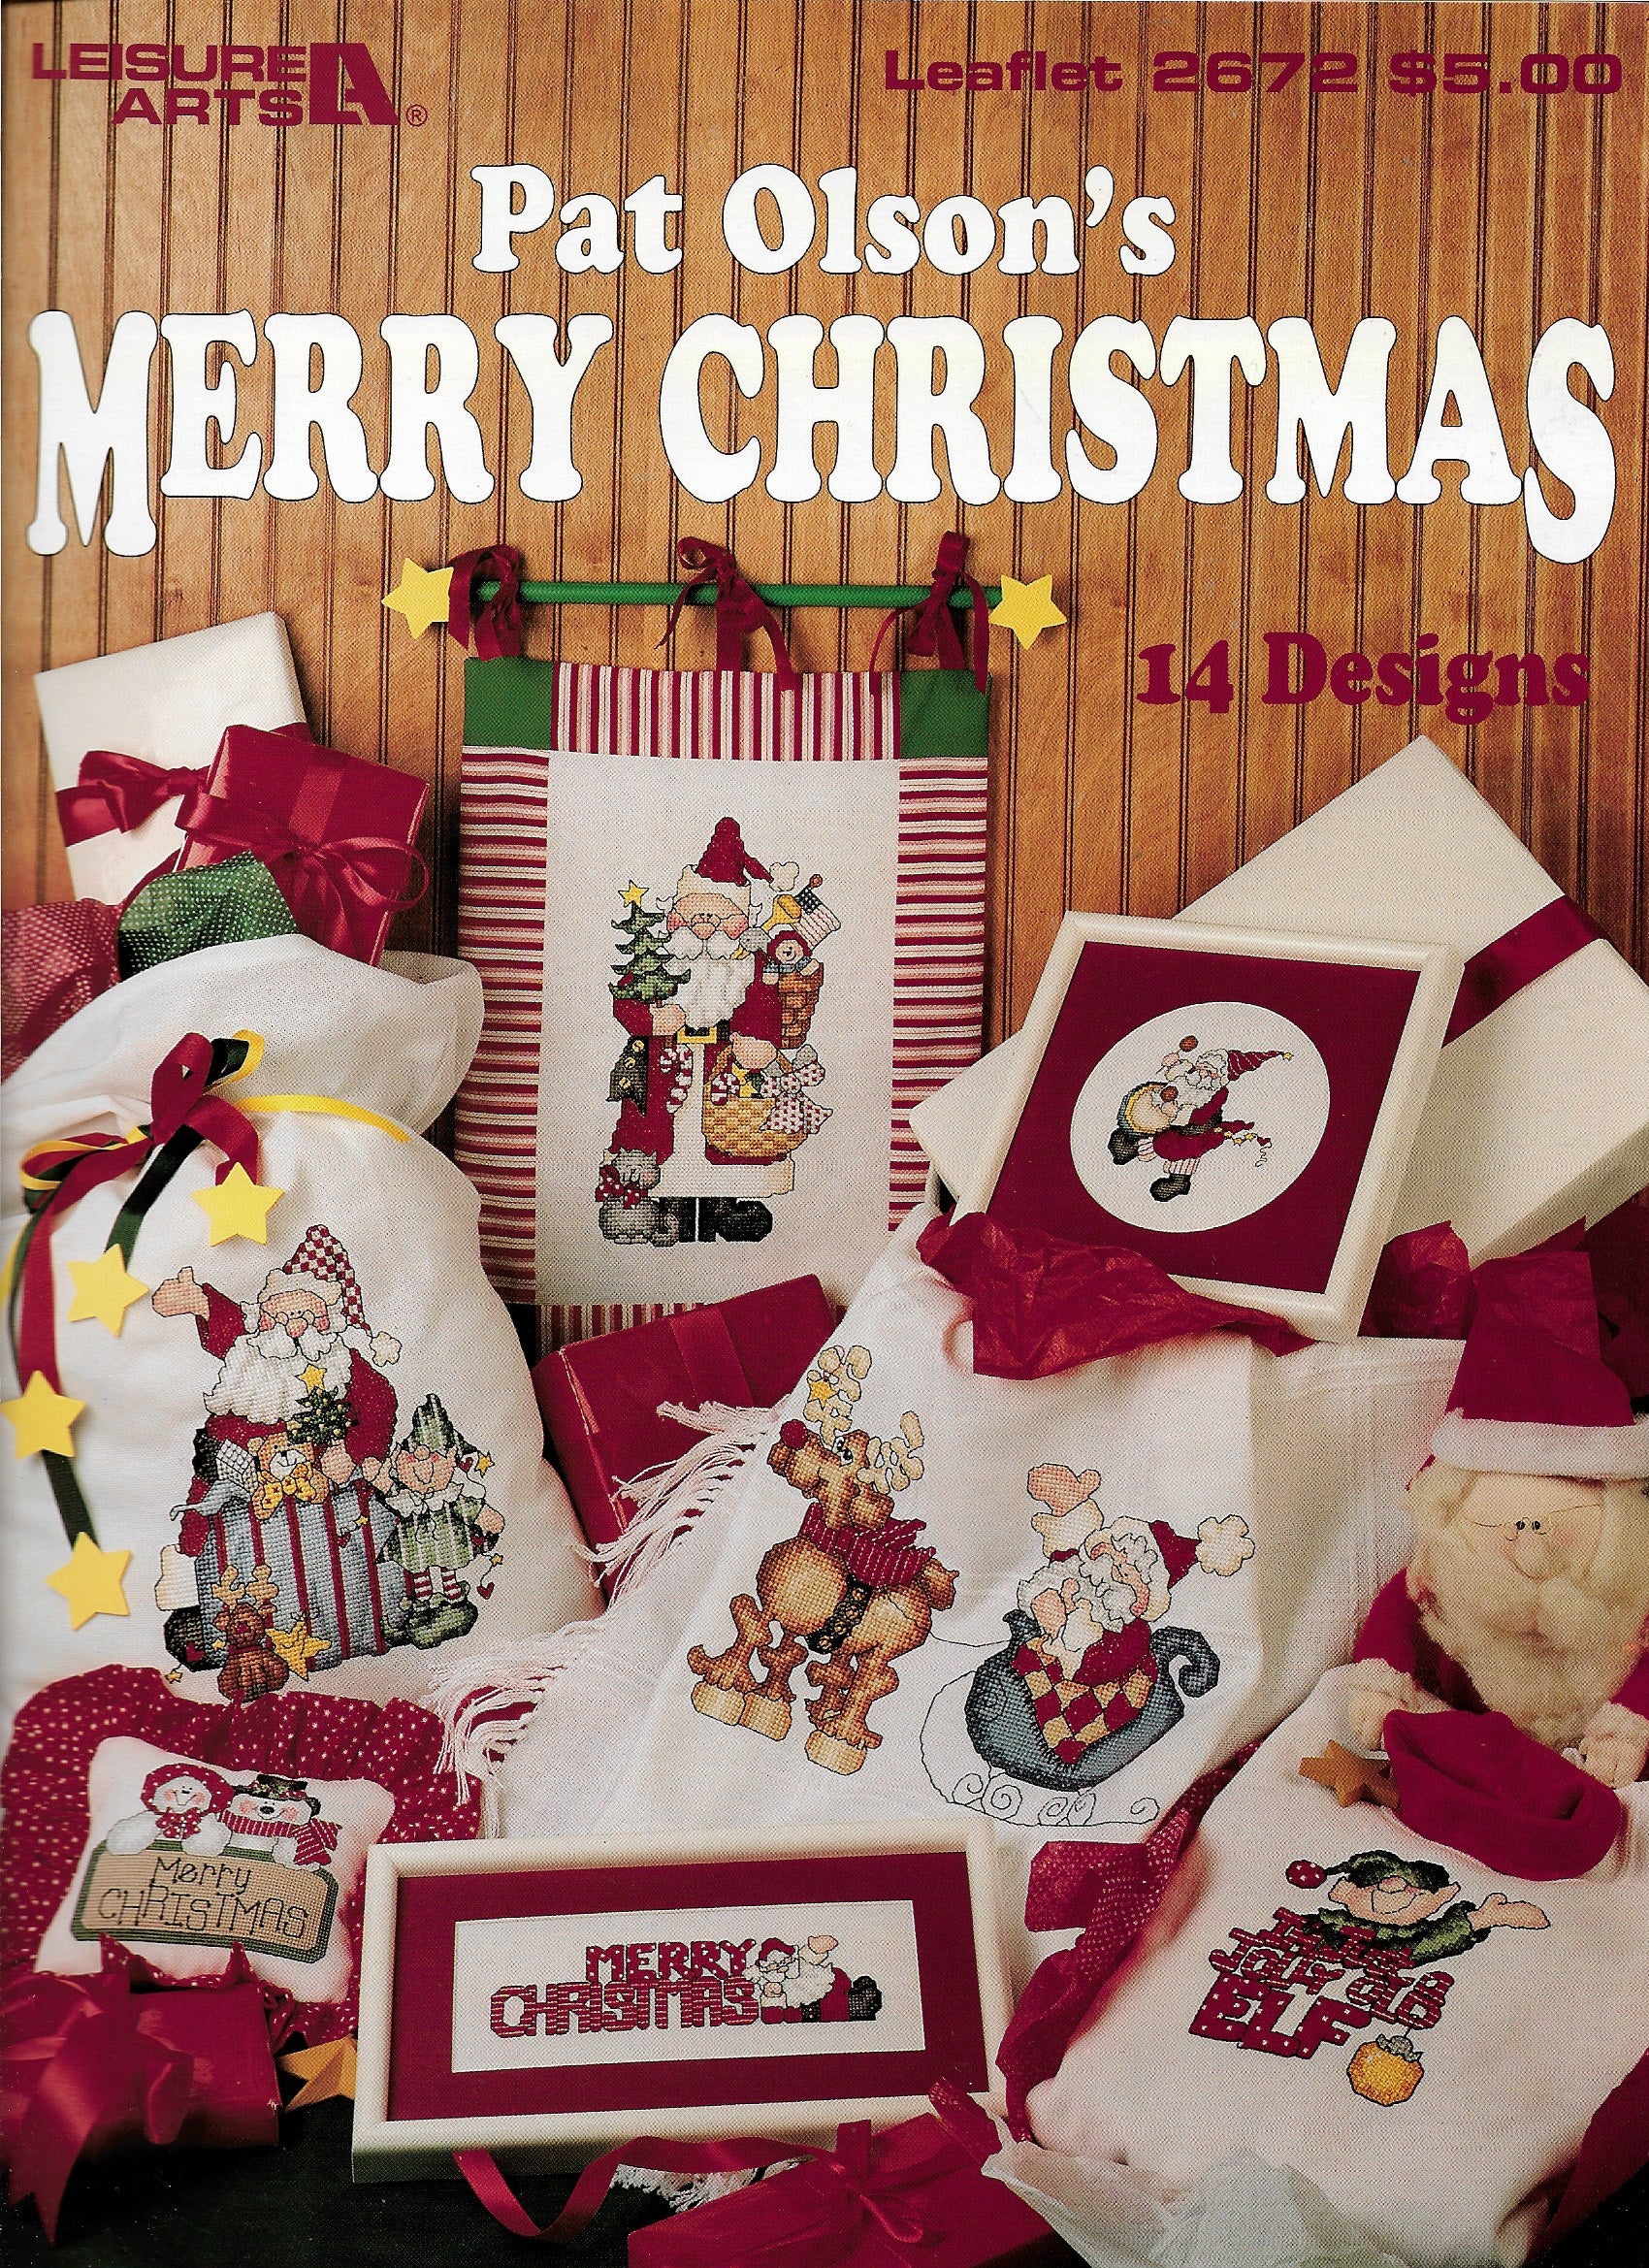 Leisure Arts Pat Olson's Merry Christmas 2672 cross stitch pattern